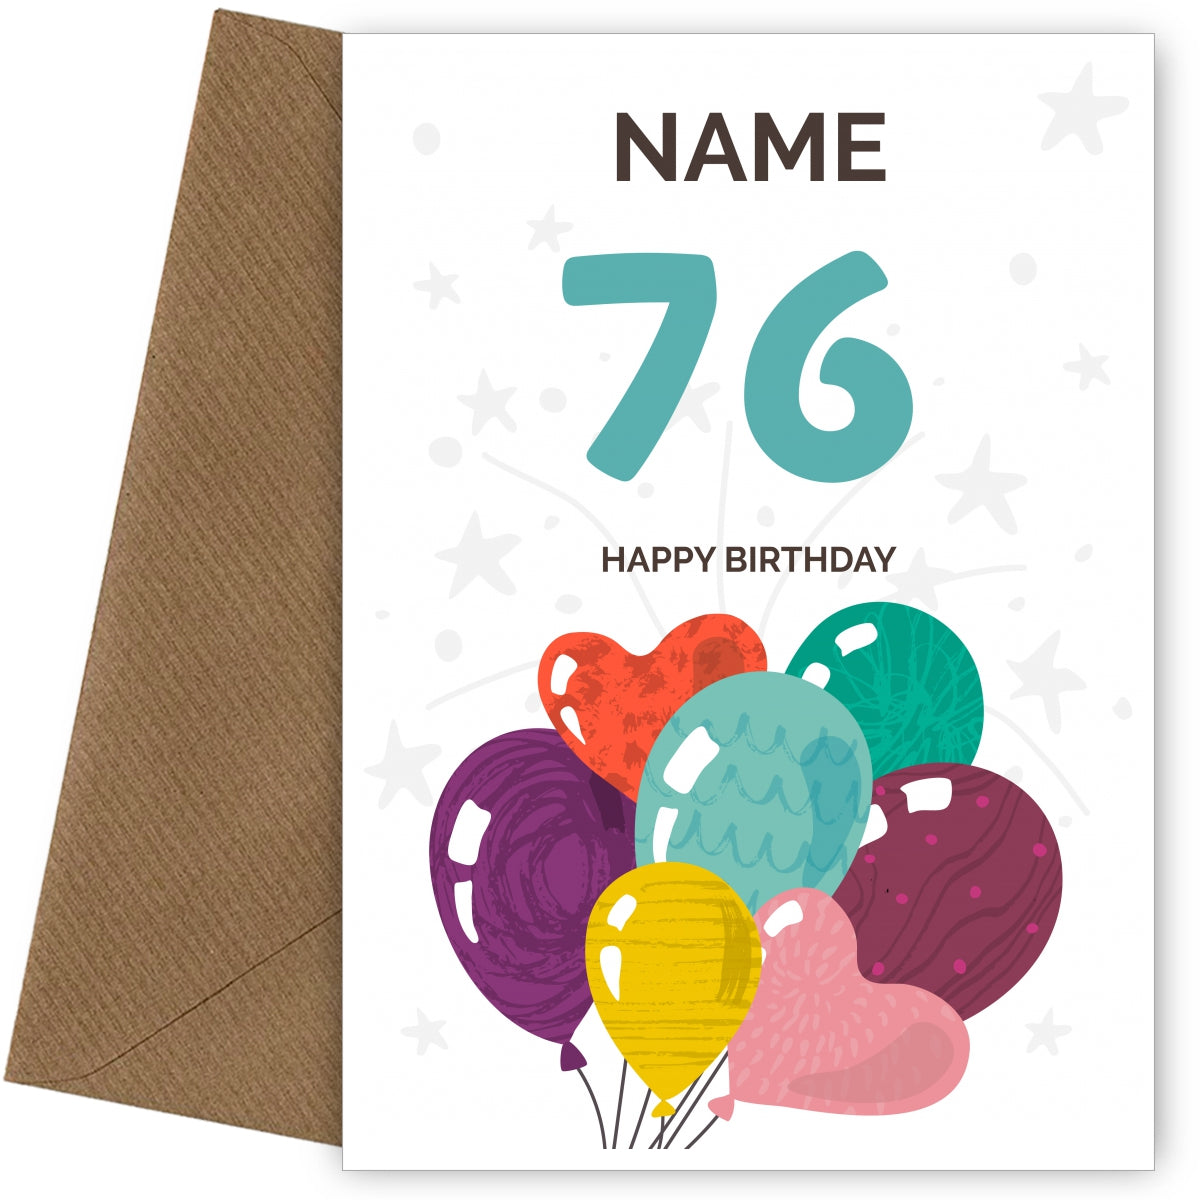 Happy 76th Birthday Card - Fun Balloons Design